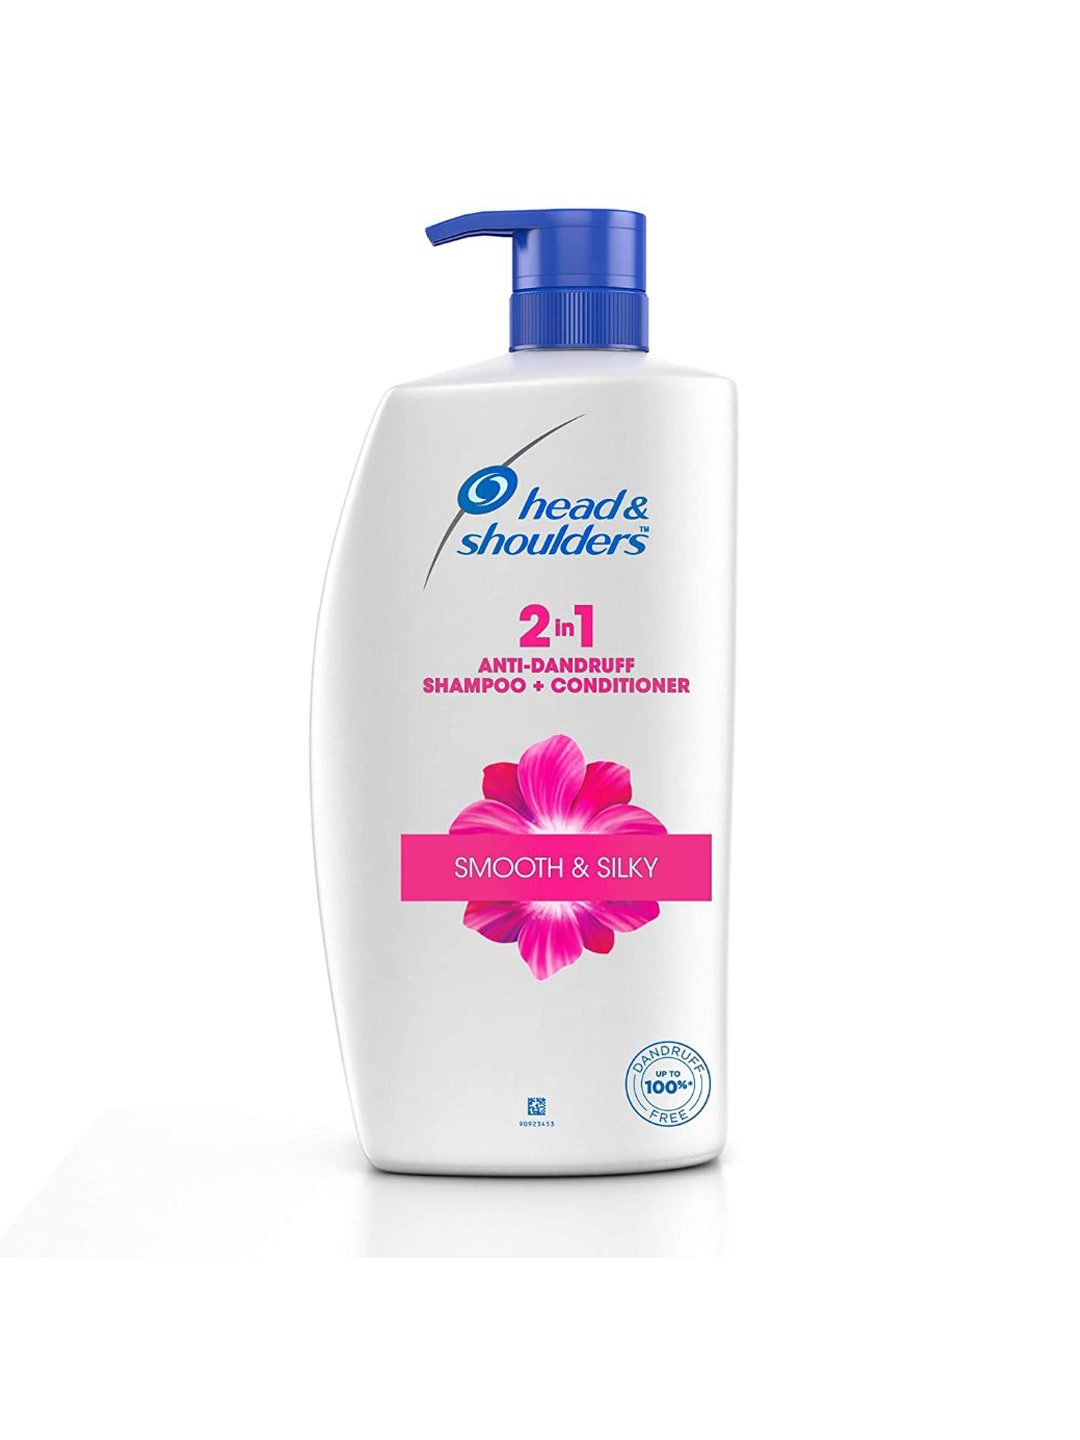 Head & Shoulders 2-in-1 Smooth & Silky Anti-Dandruff Shampoo + Conditioner - 1L Price in India